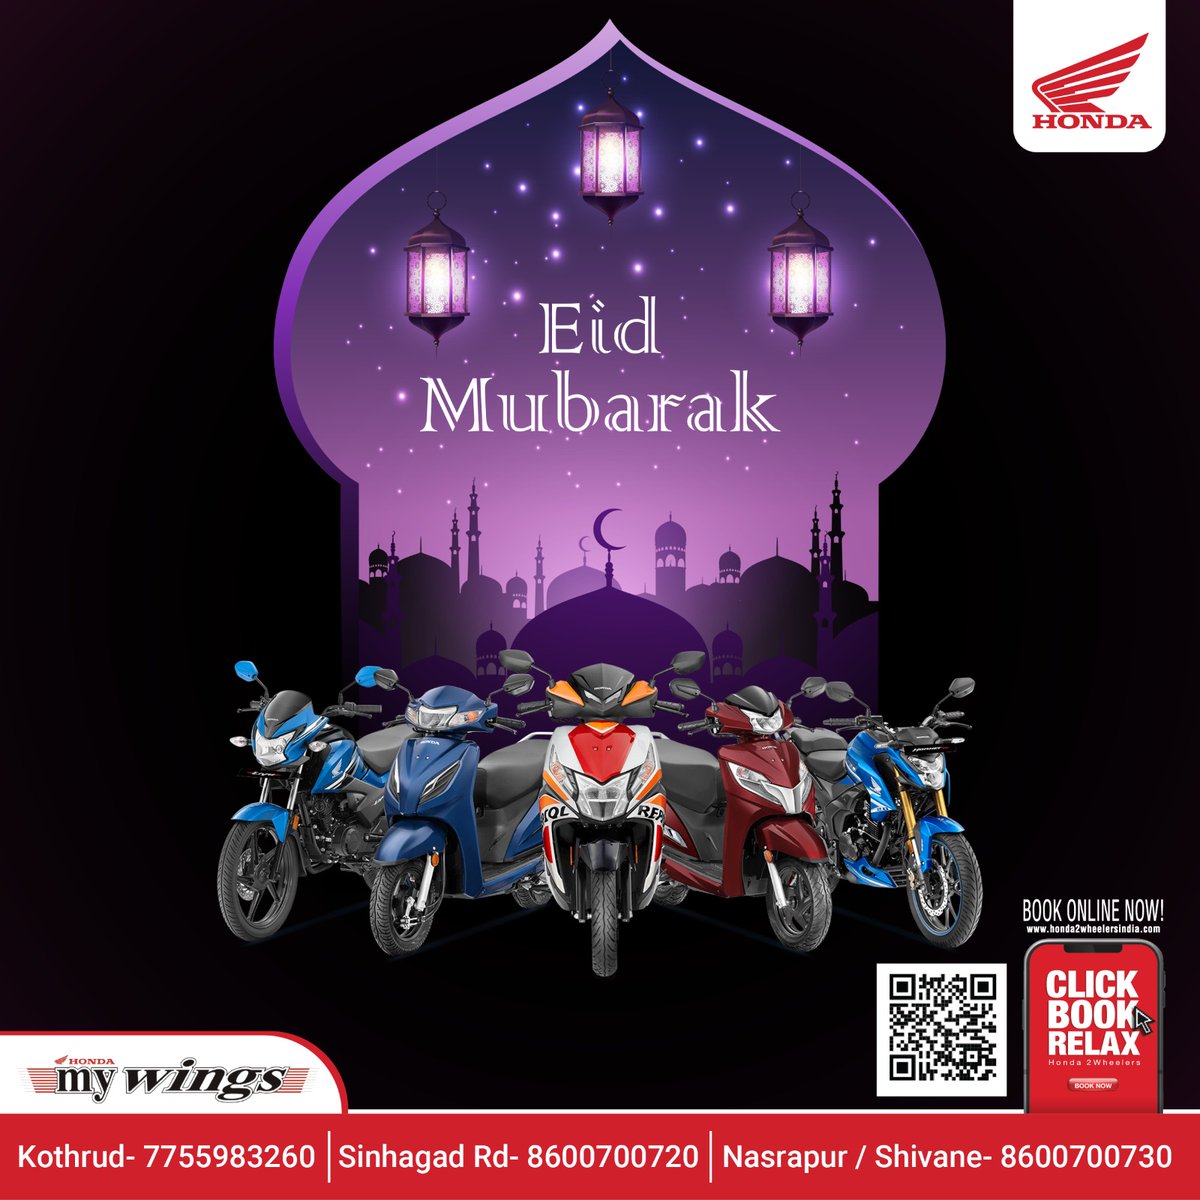 🌙✨ EID MUBARAK from Honda! ✨🌙

#MyWingsHonda #eidmubarak #EidCelebration #EidVibes #Honda #EidGreetings #EasyRide #HondaDeals #HappyEid